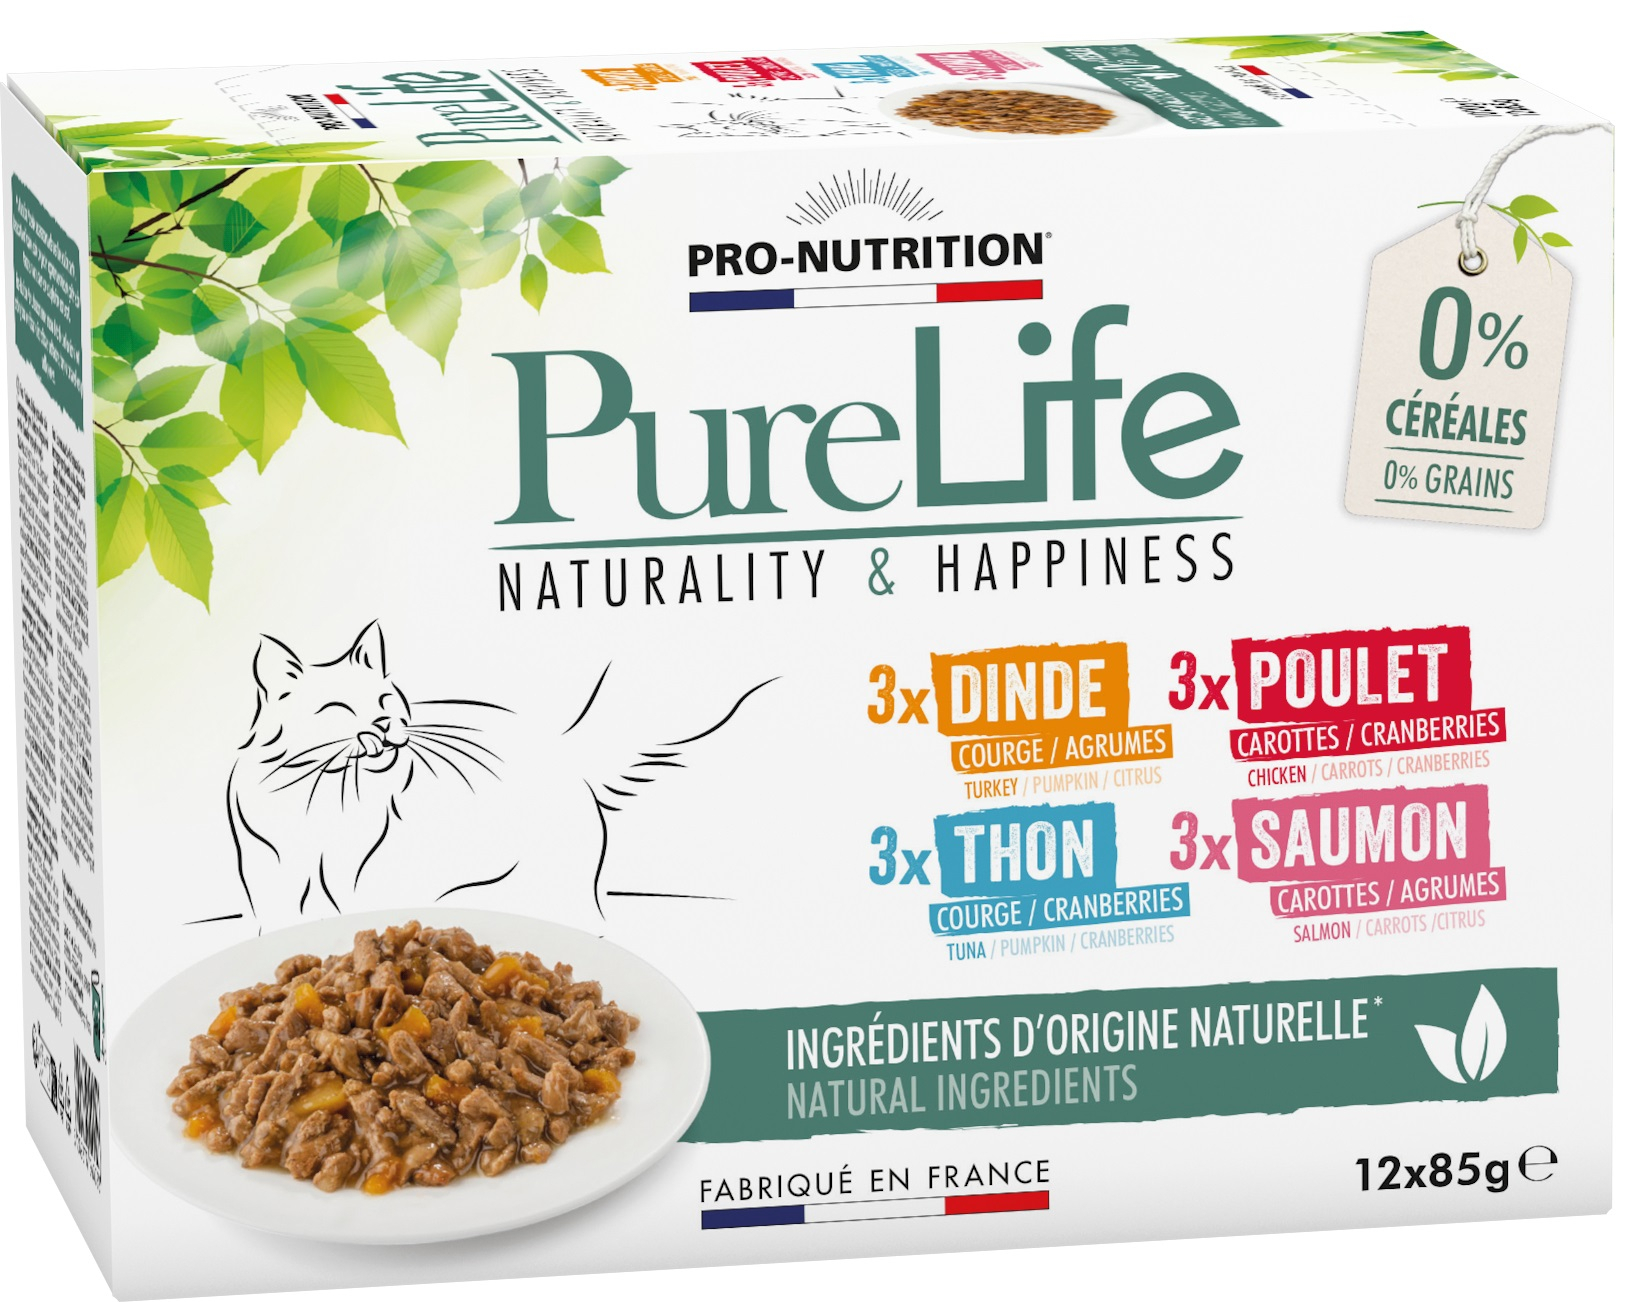 PRO-NUTRITION Pure Life comida húmeda para gatos - 12 x 85g - 4 recetas